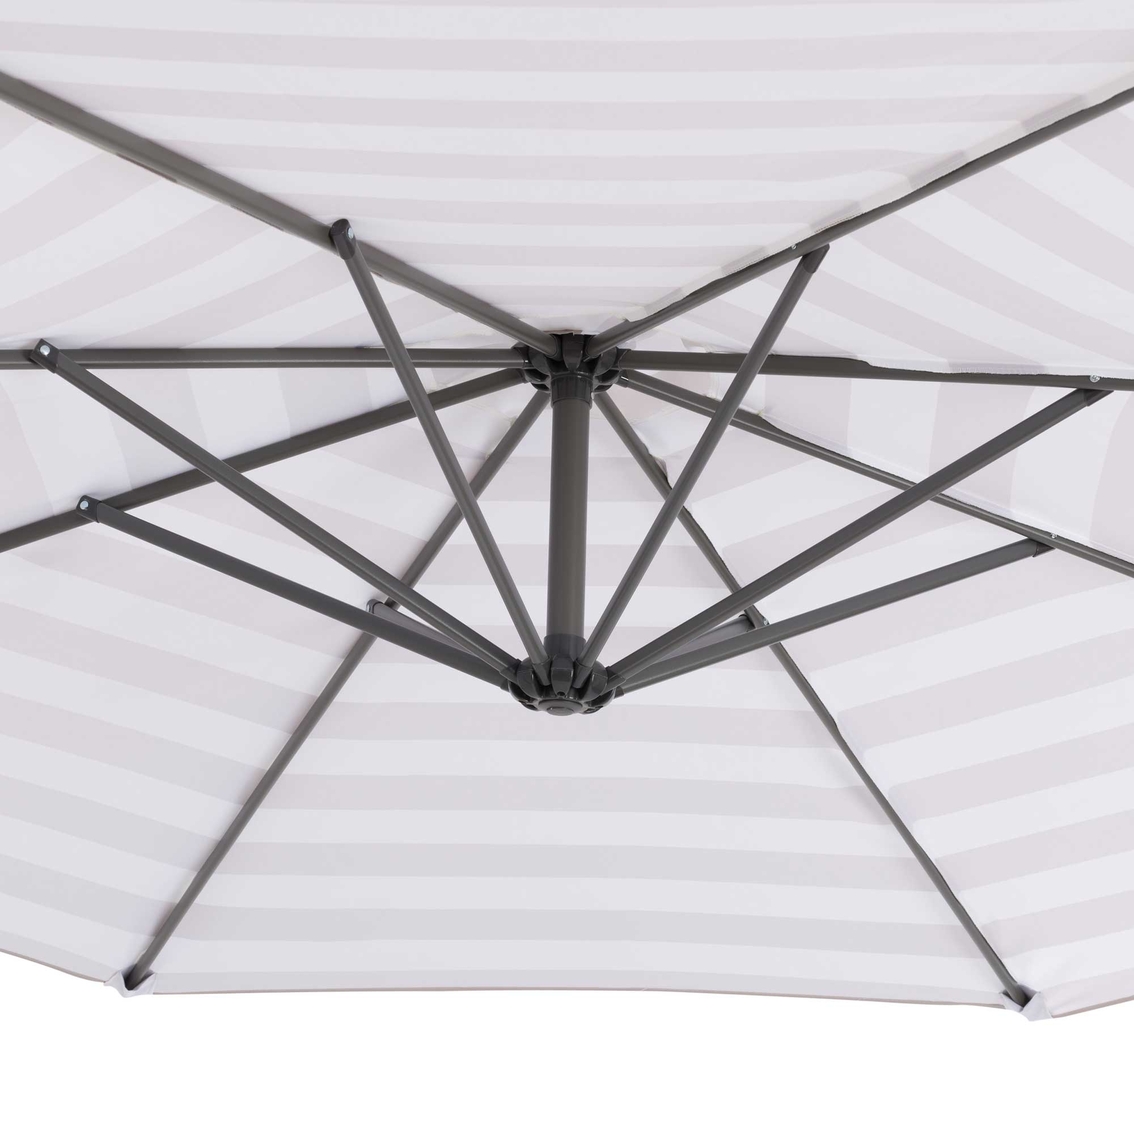 CorLiving PPU-421-U 10 ft. Offset UV Resistant Umbrella - Image 3 of 10